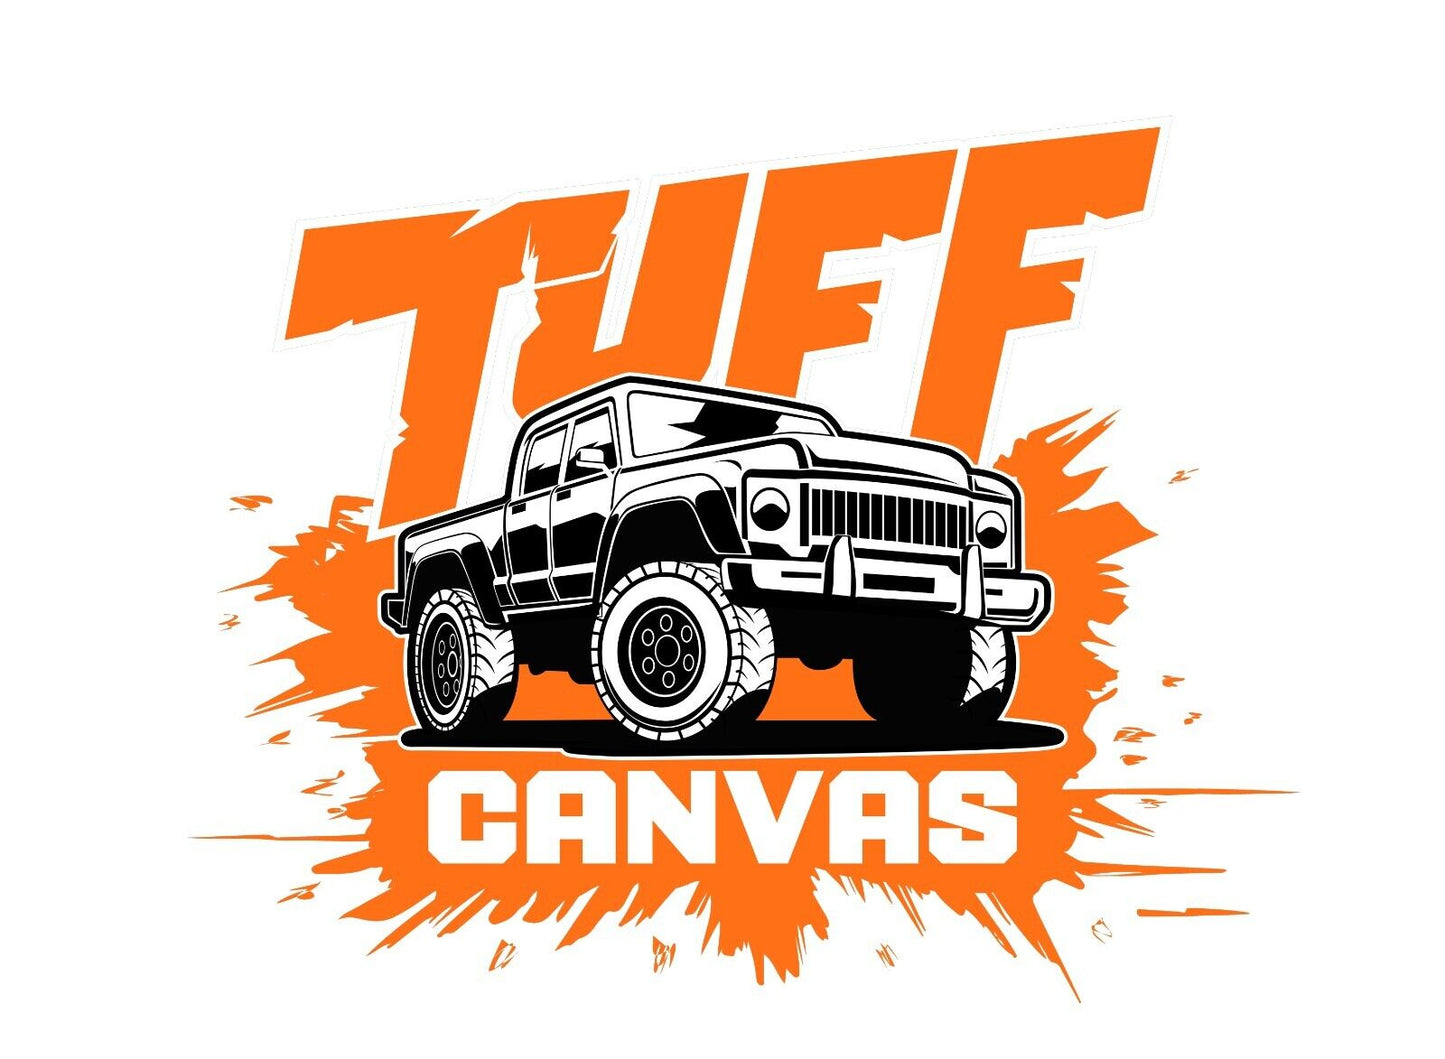 Tuff Canvas Seat Covers Front For Toyota Hiace Van LWB SLWB GDH300R Crew Van 2/2019-2024 Charcoal